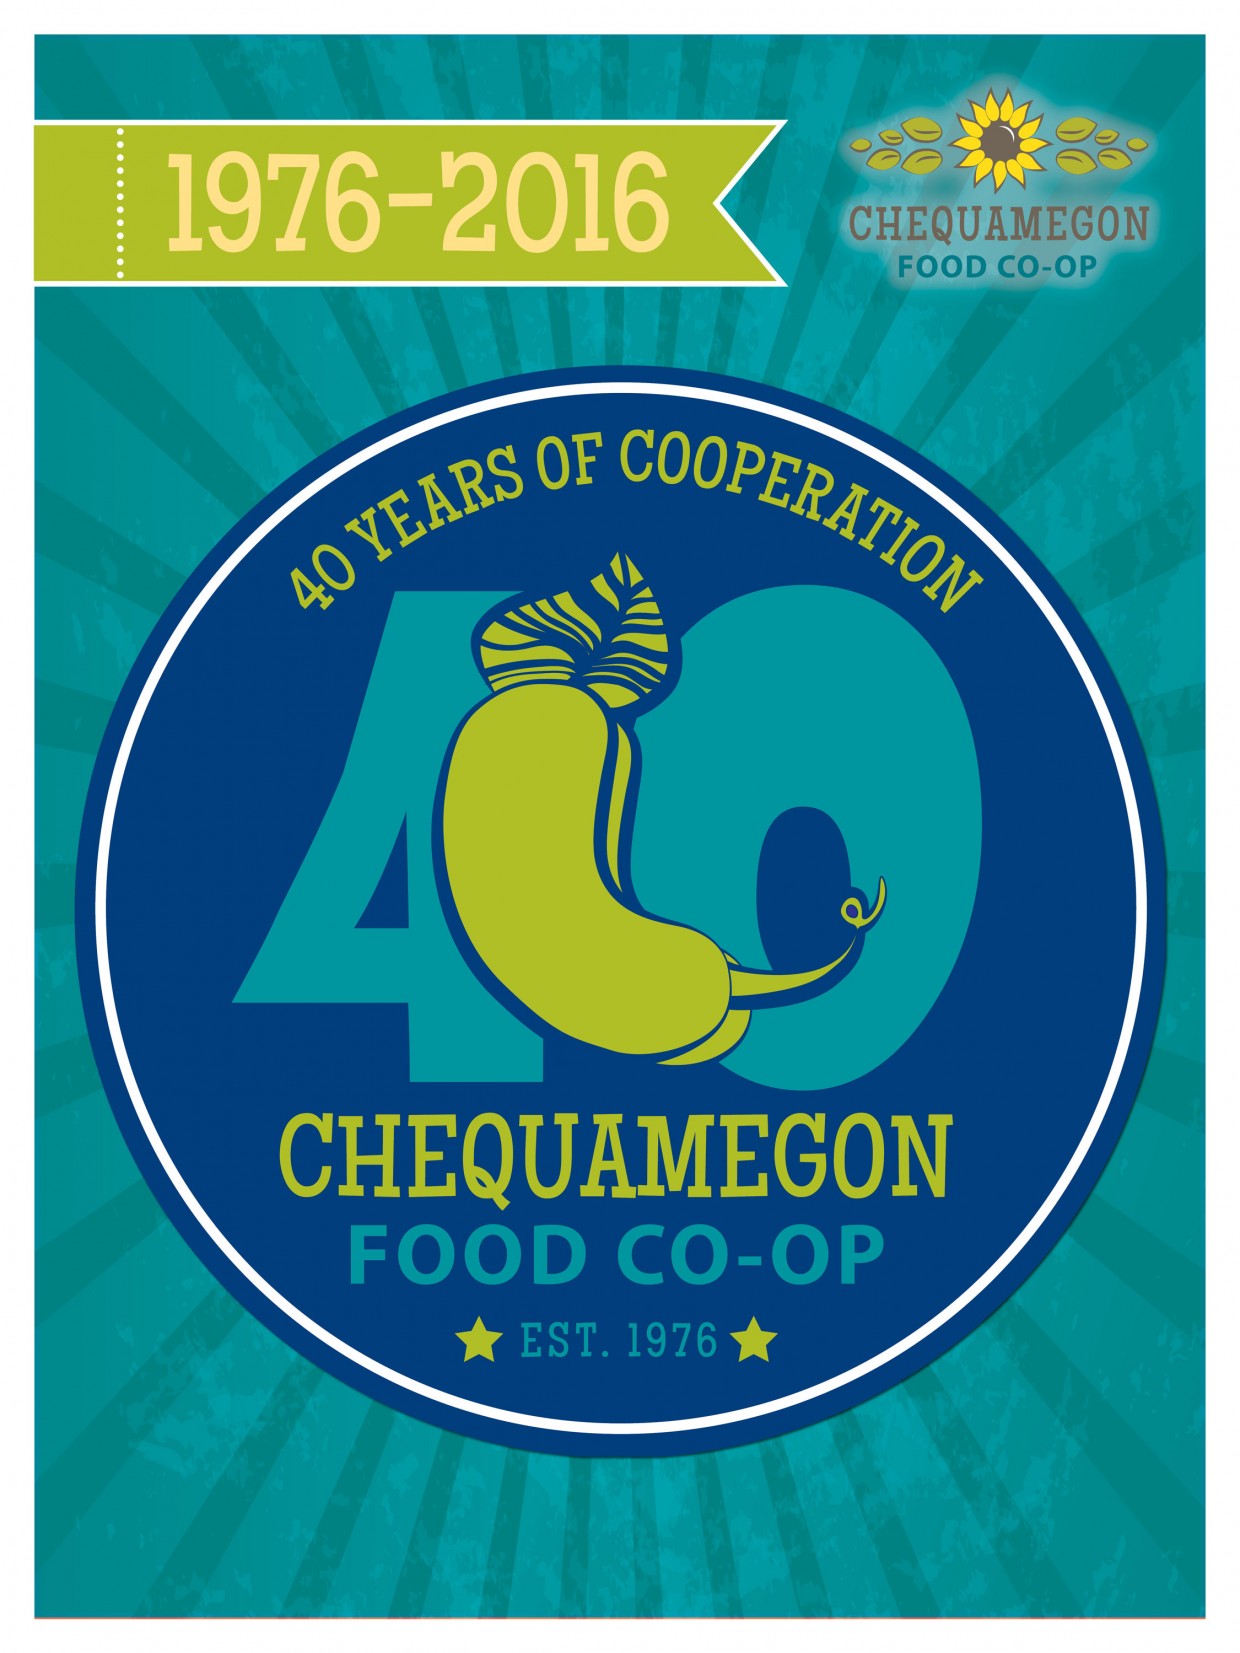 Celebrating 40 Years of Cooperation!